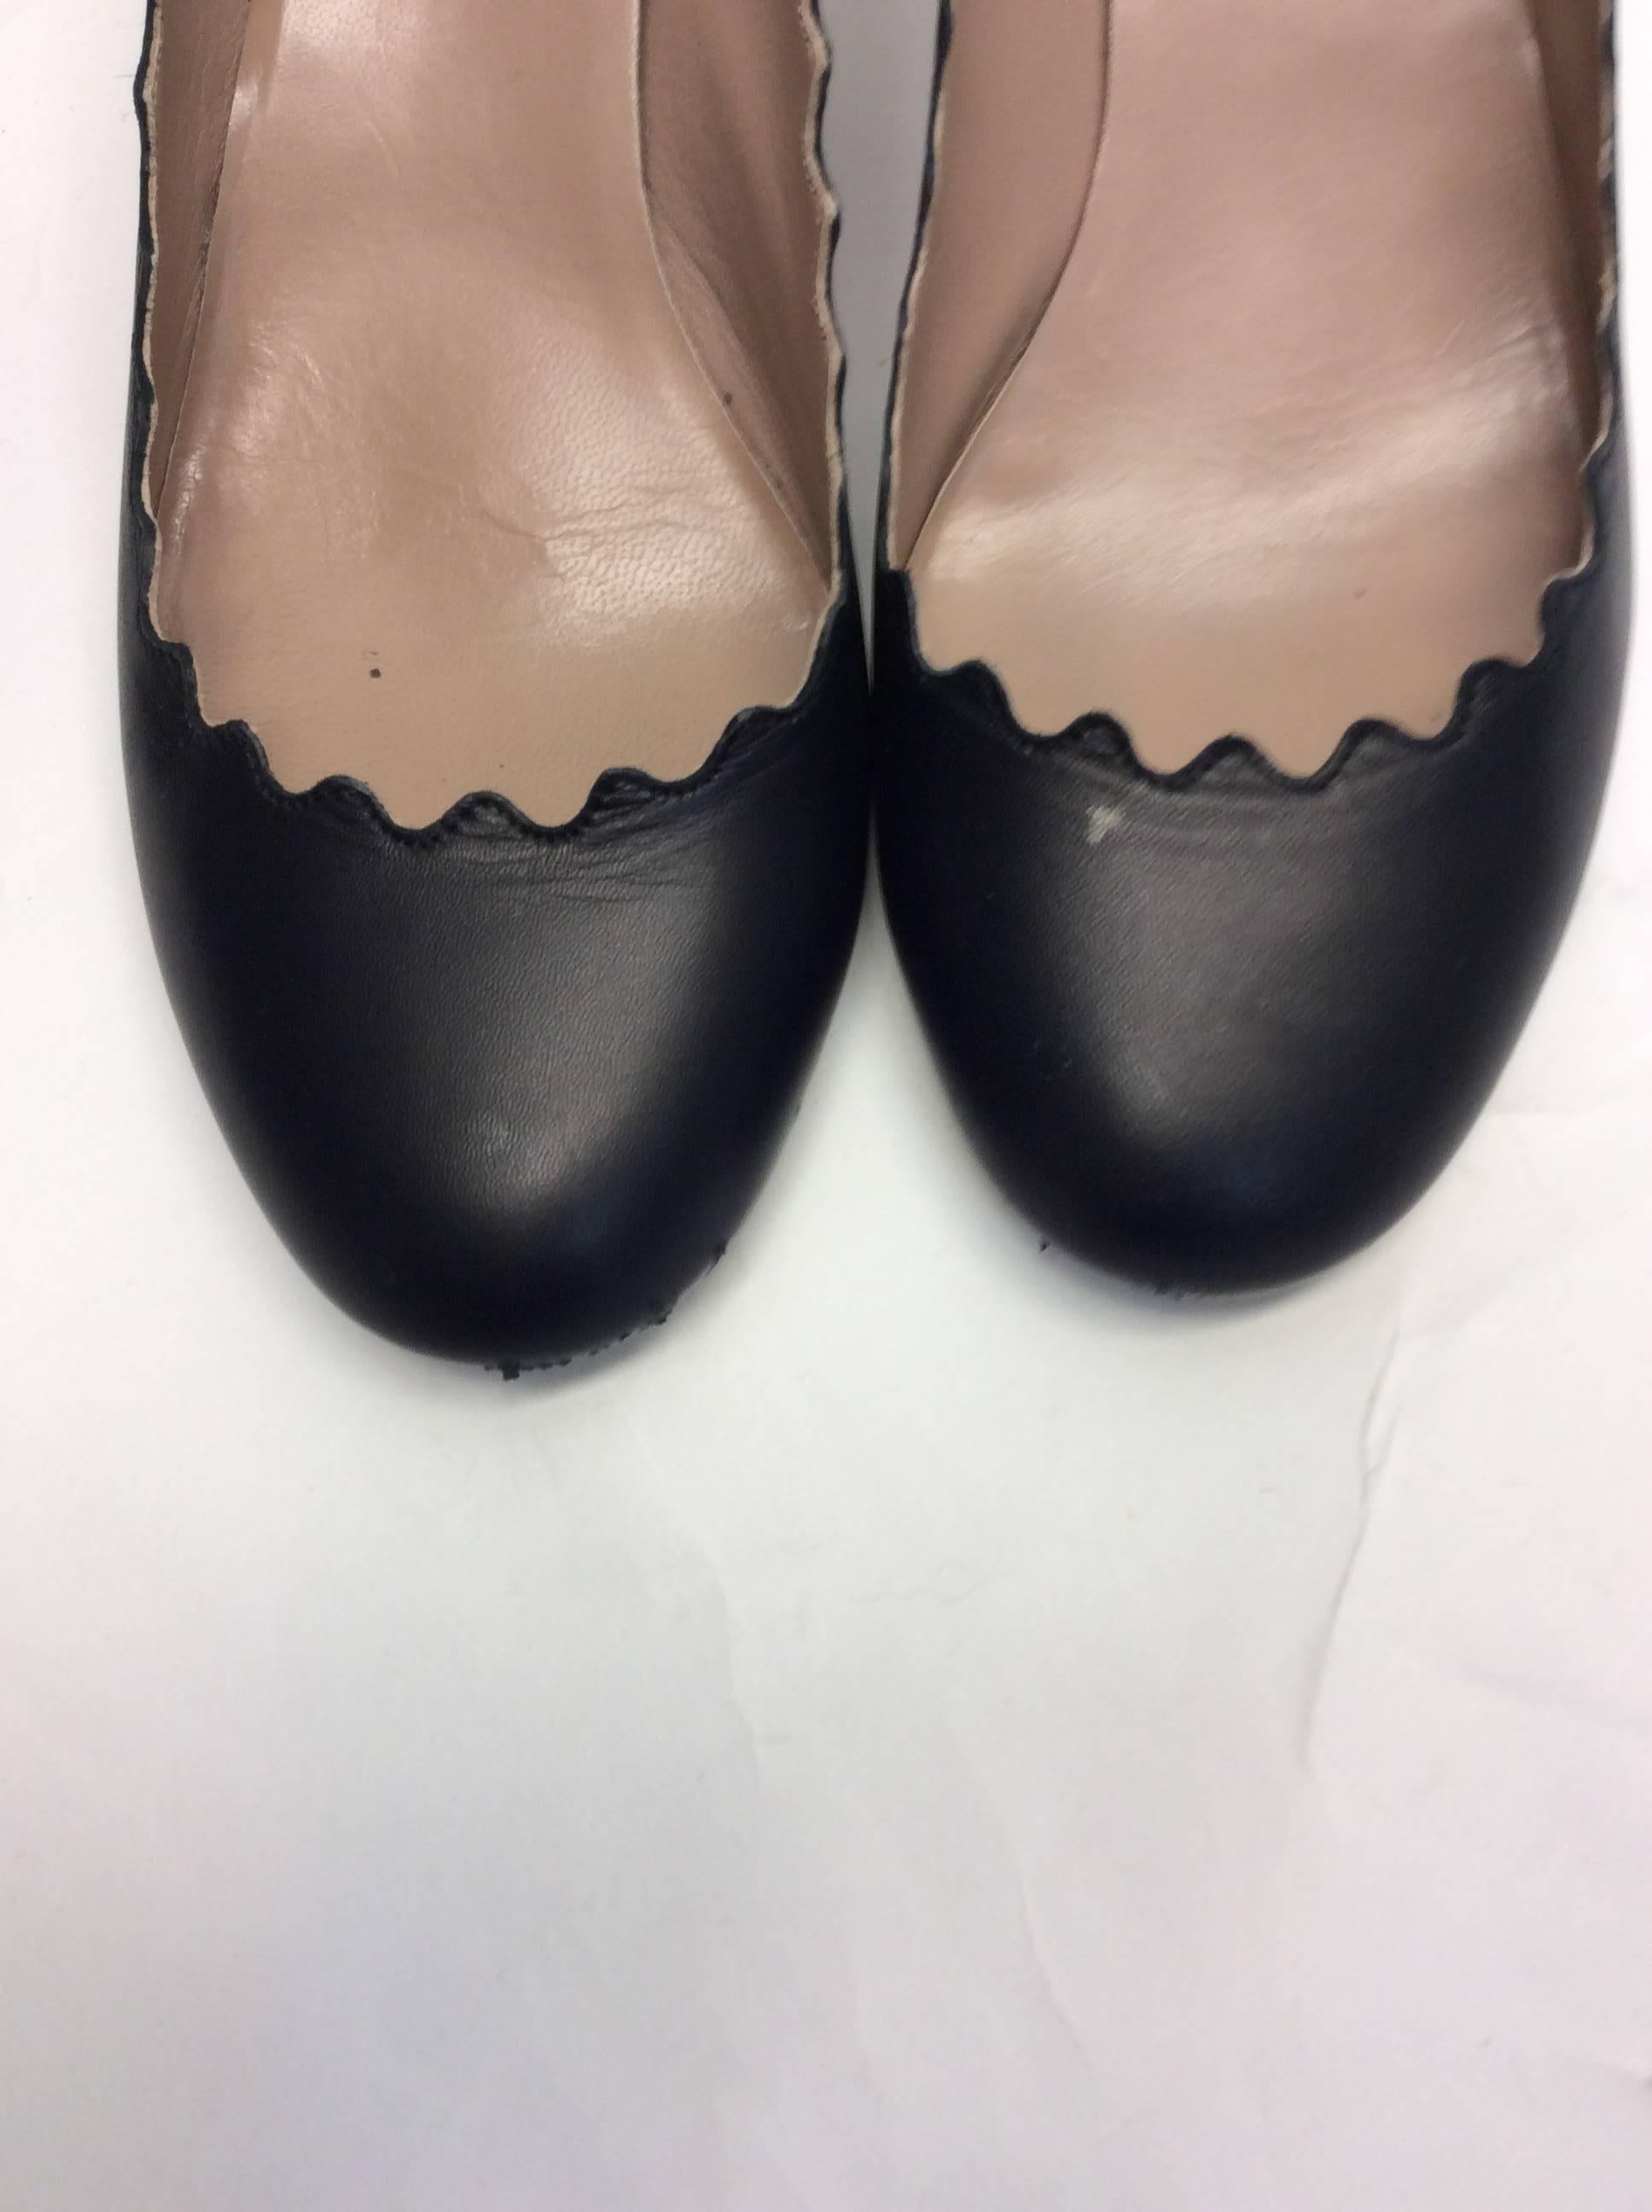 Chloe Black Scalloped Heels
Size 37
$250
Made in Italy
2 inch heel
